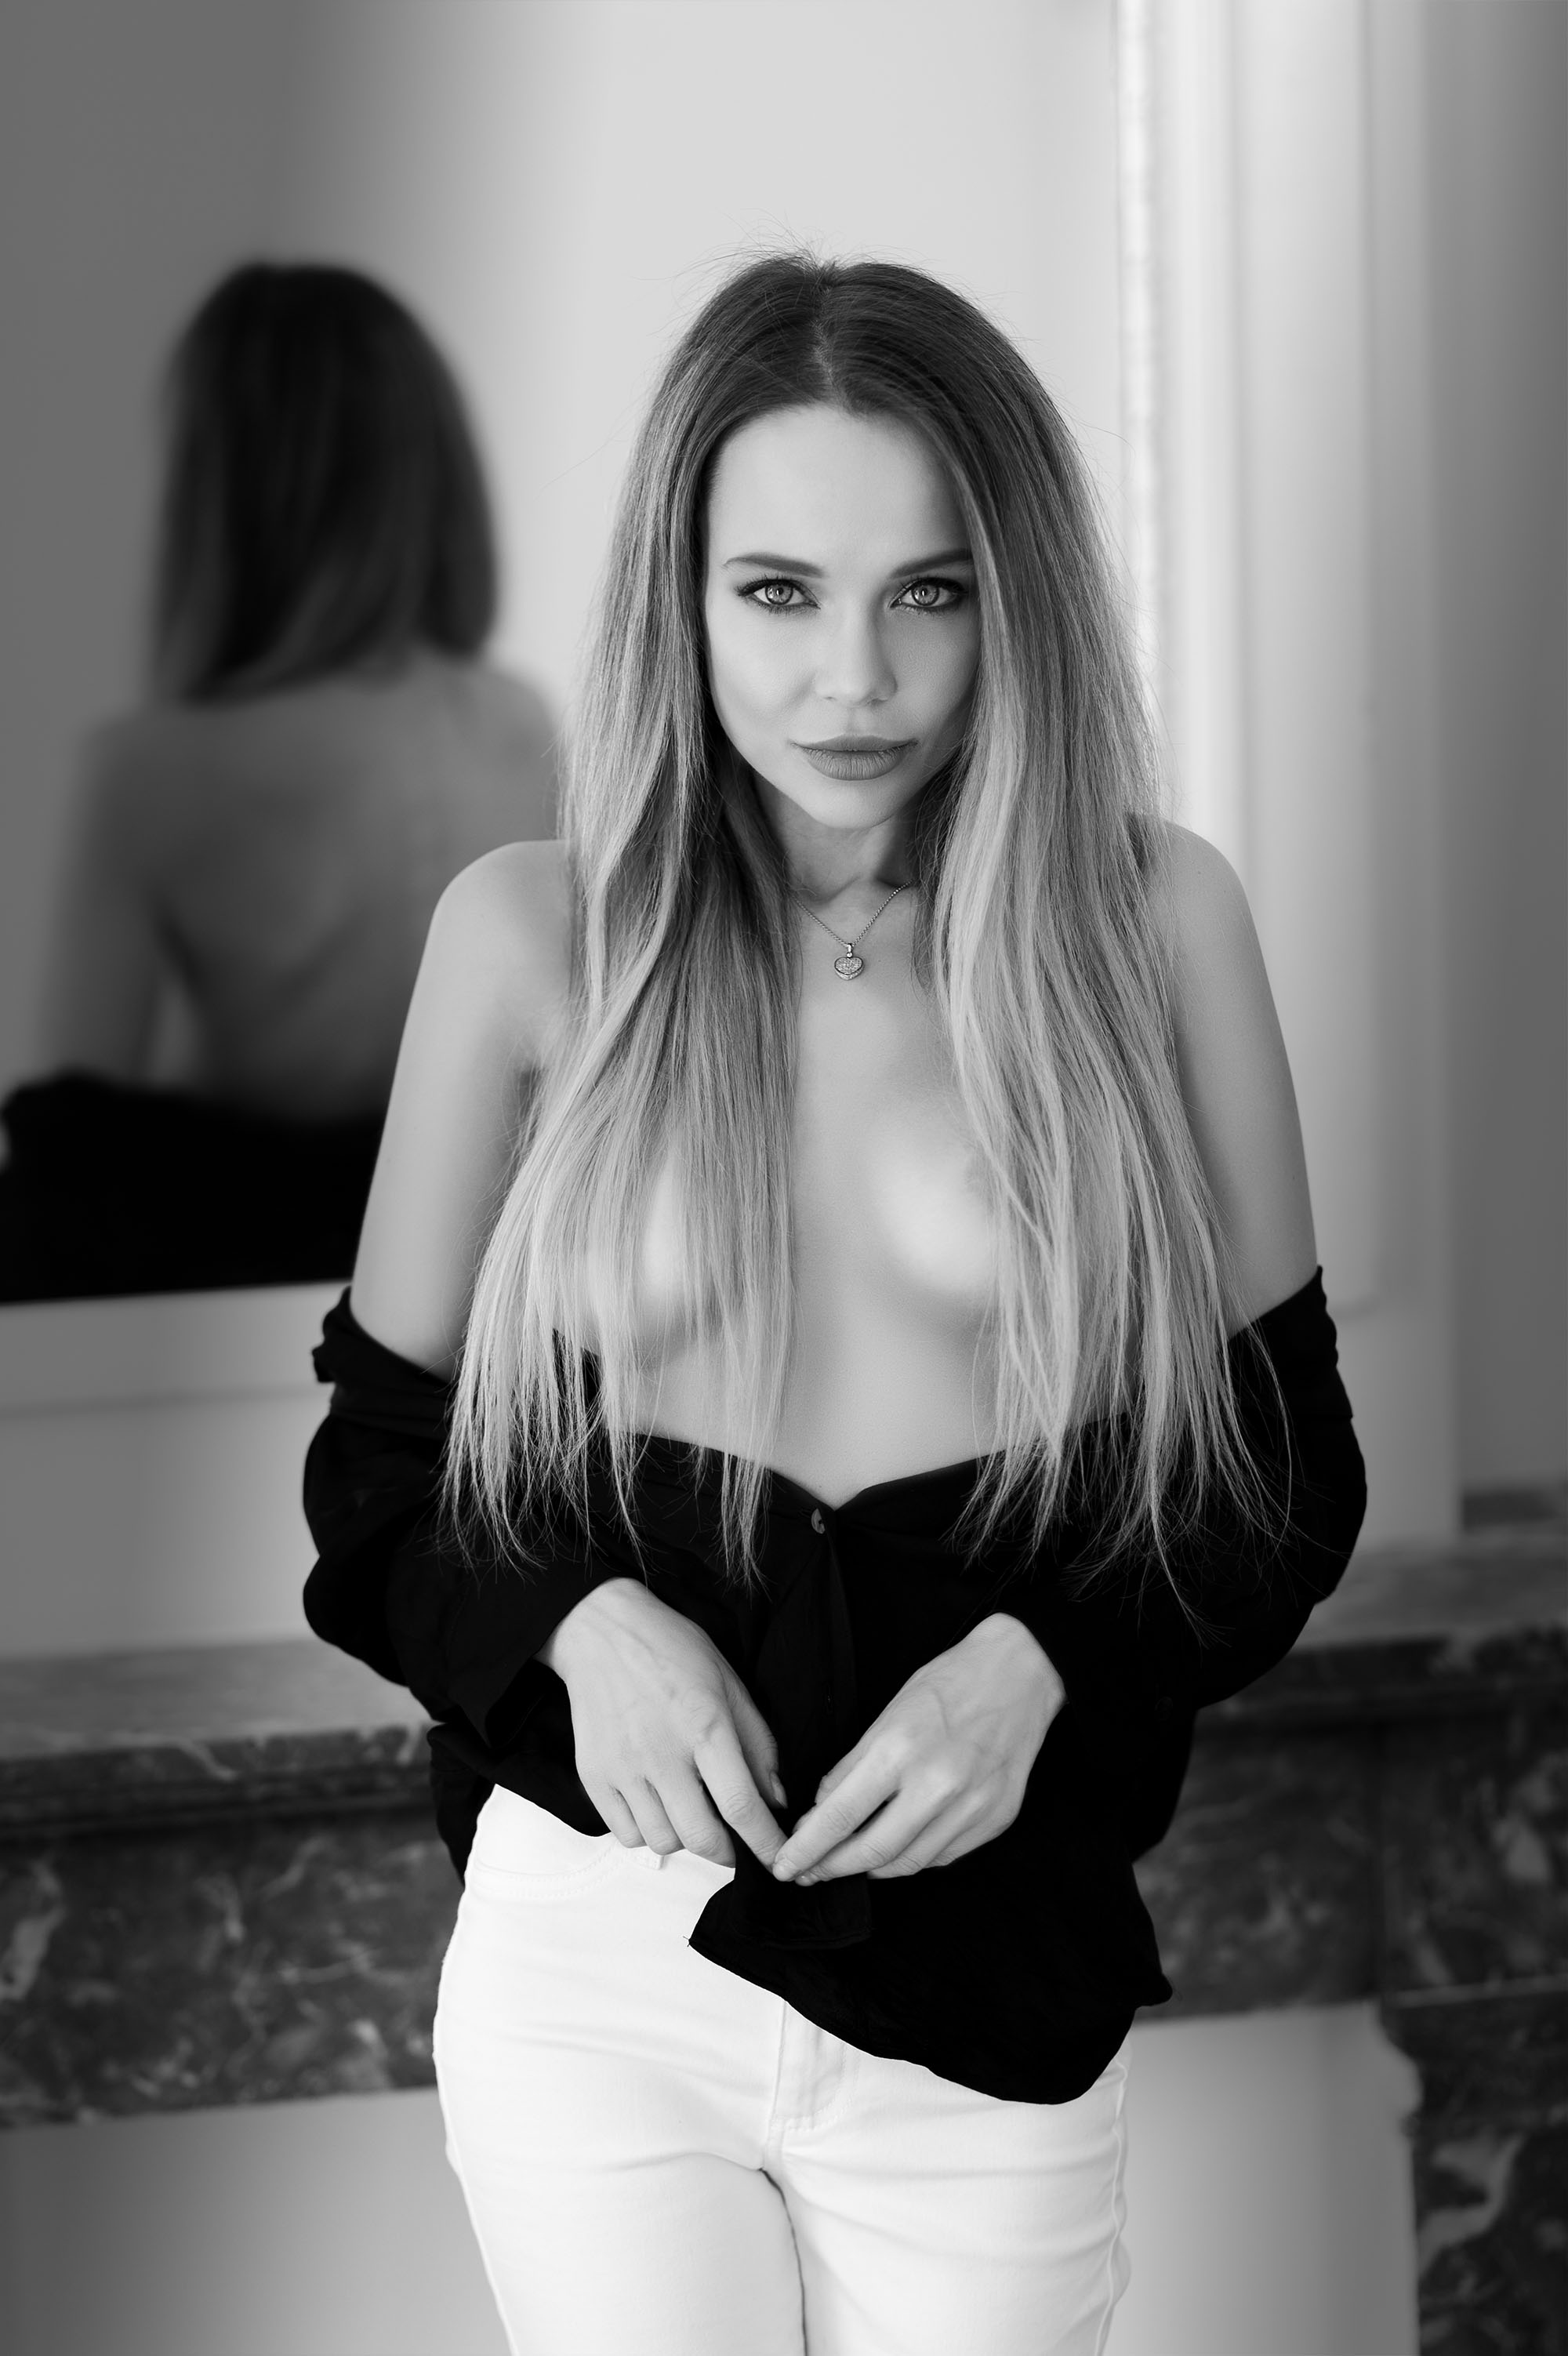 Angelina Petrova, model from Ukraine at a boudoir photoshoot